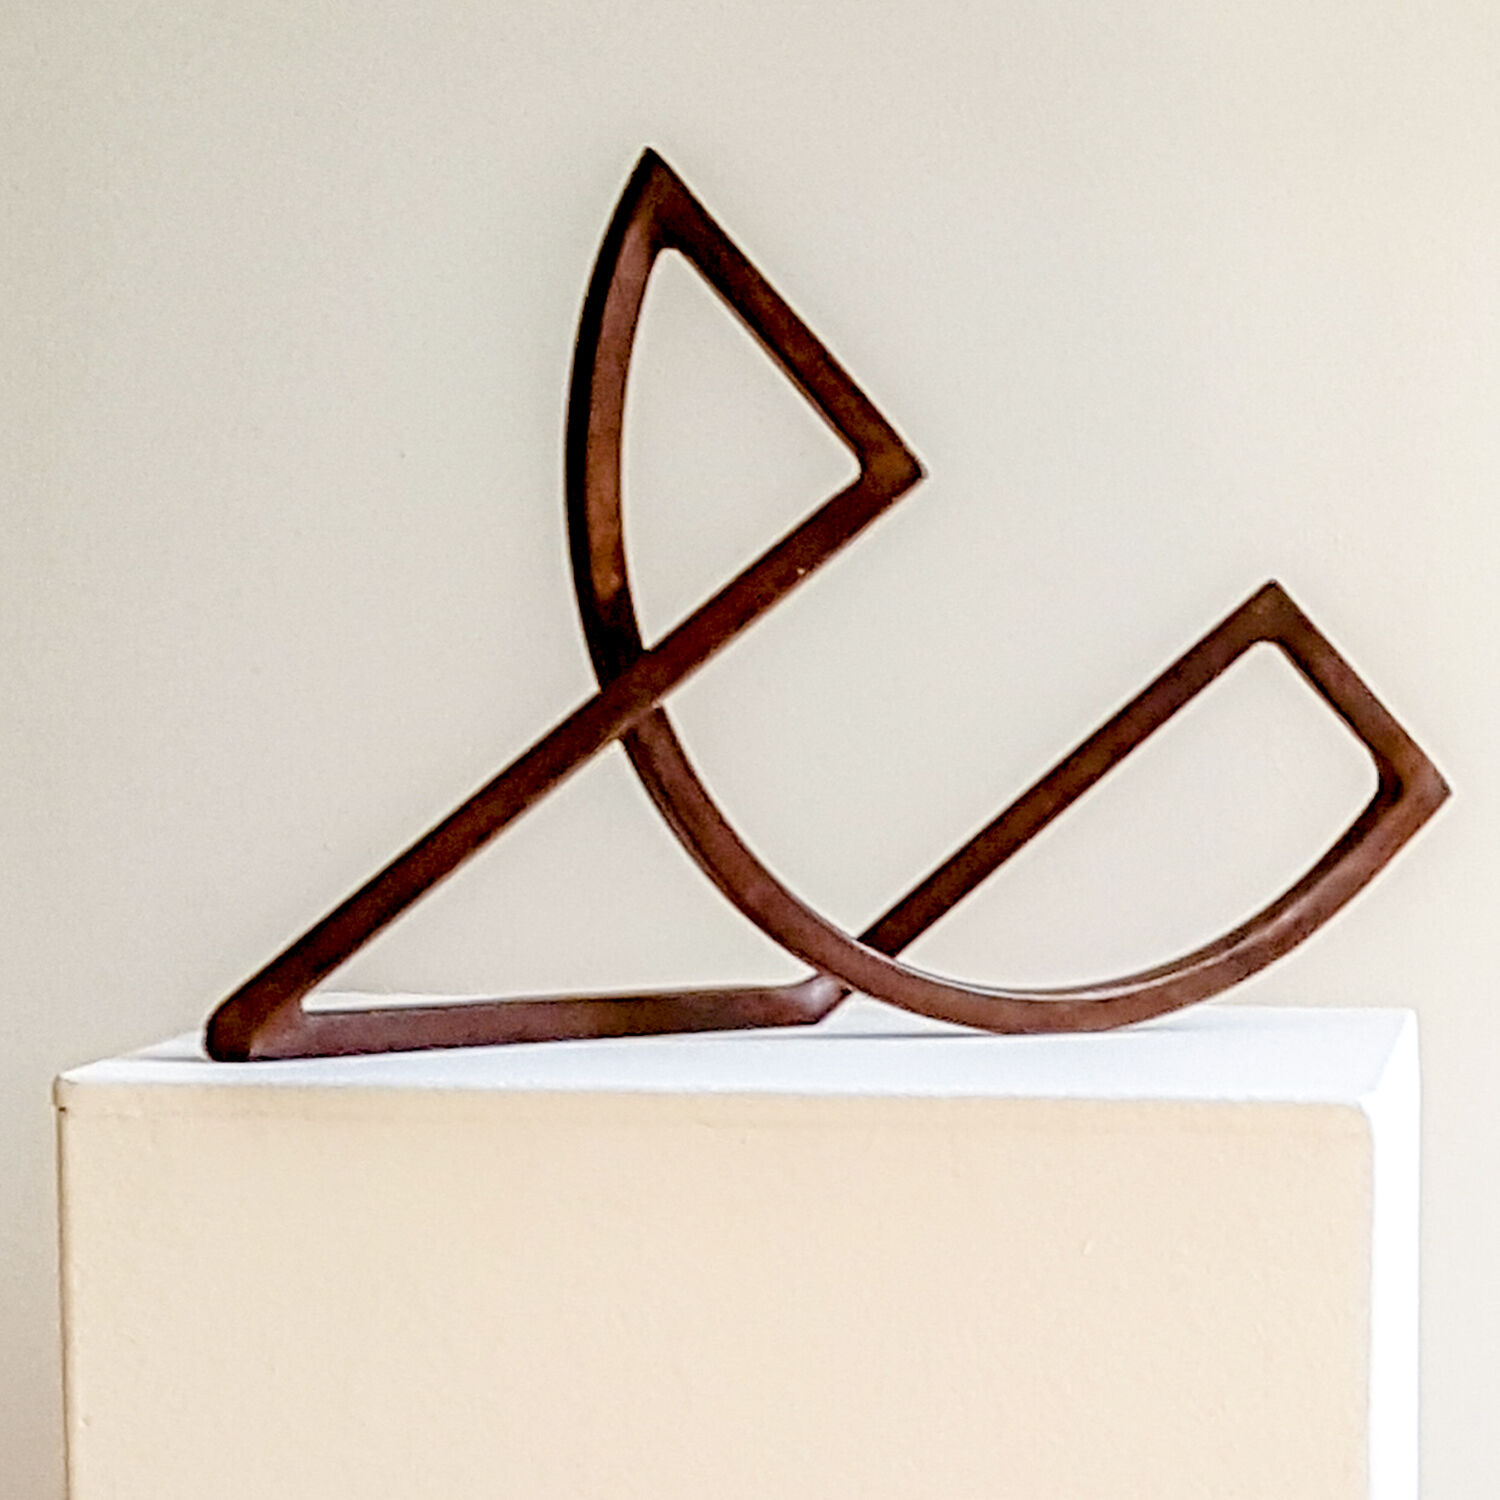 Sculpture "Loop 33 - Steel Edition" (1999) by Sonja Edle von Hoeßle